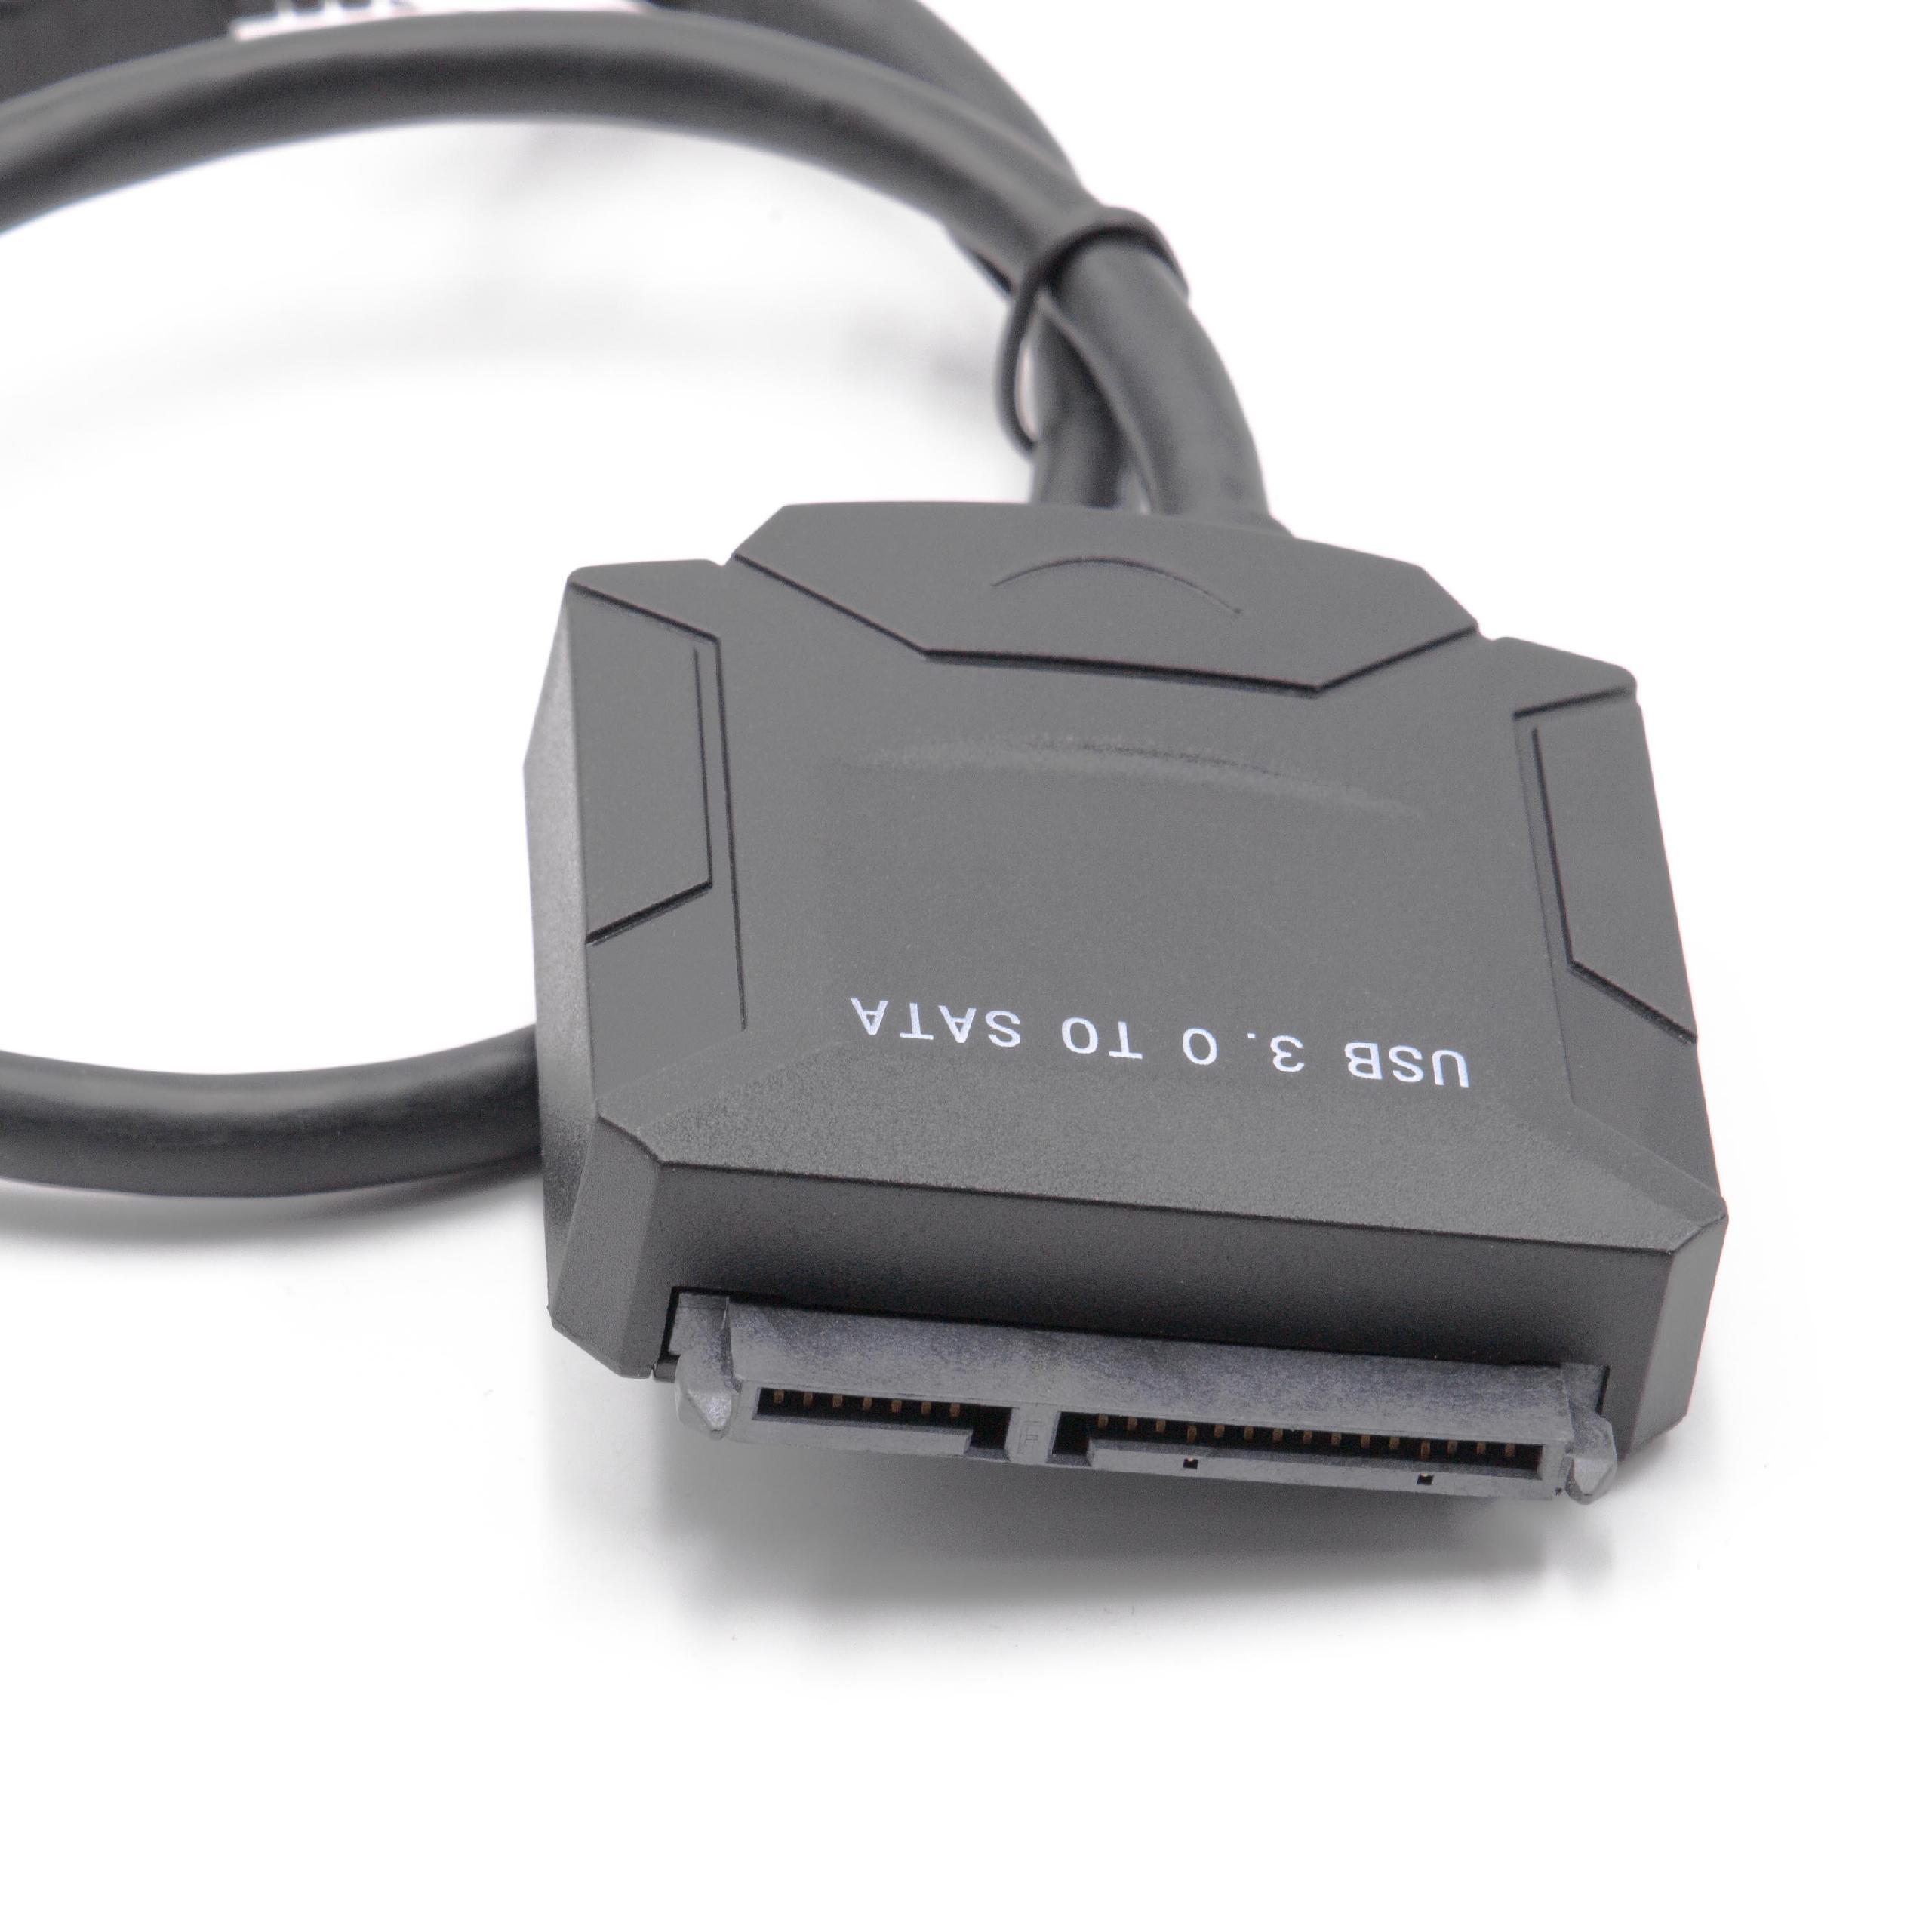 Vhbw SATA III vers USB 3.0 Câble de raccordement pour disque dur 2'5, 3'5  HDD, SSD Plug & Play noir